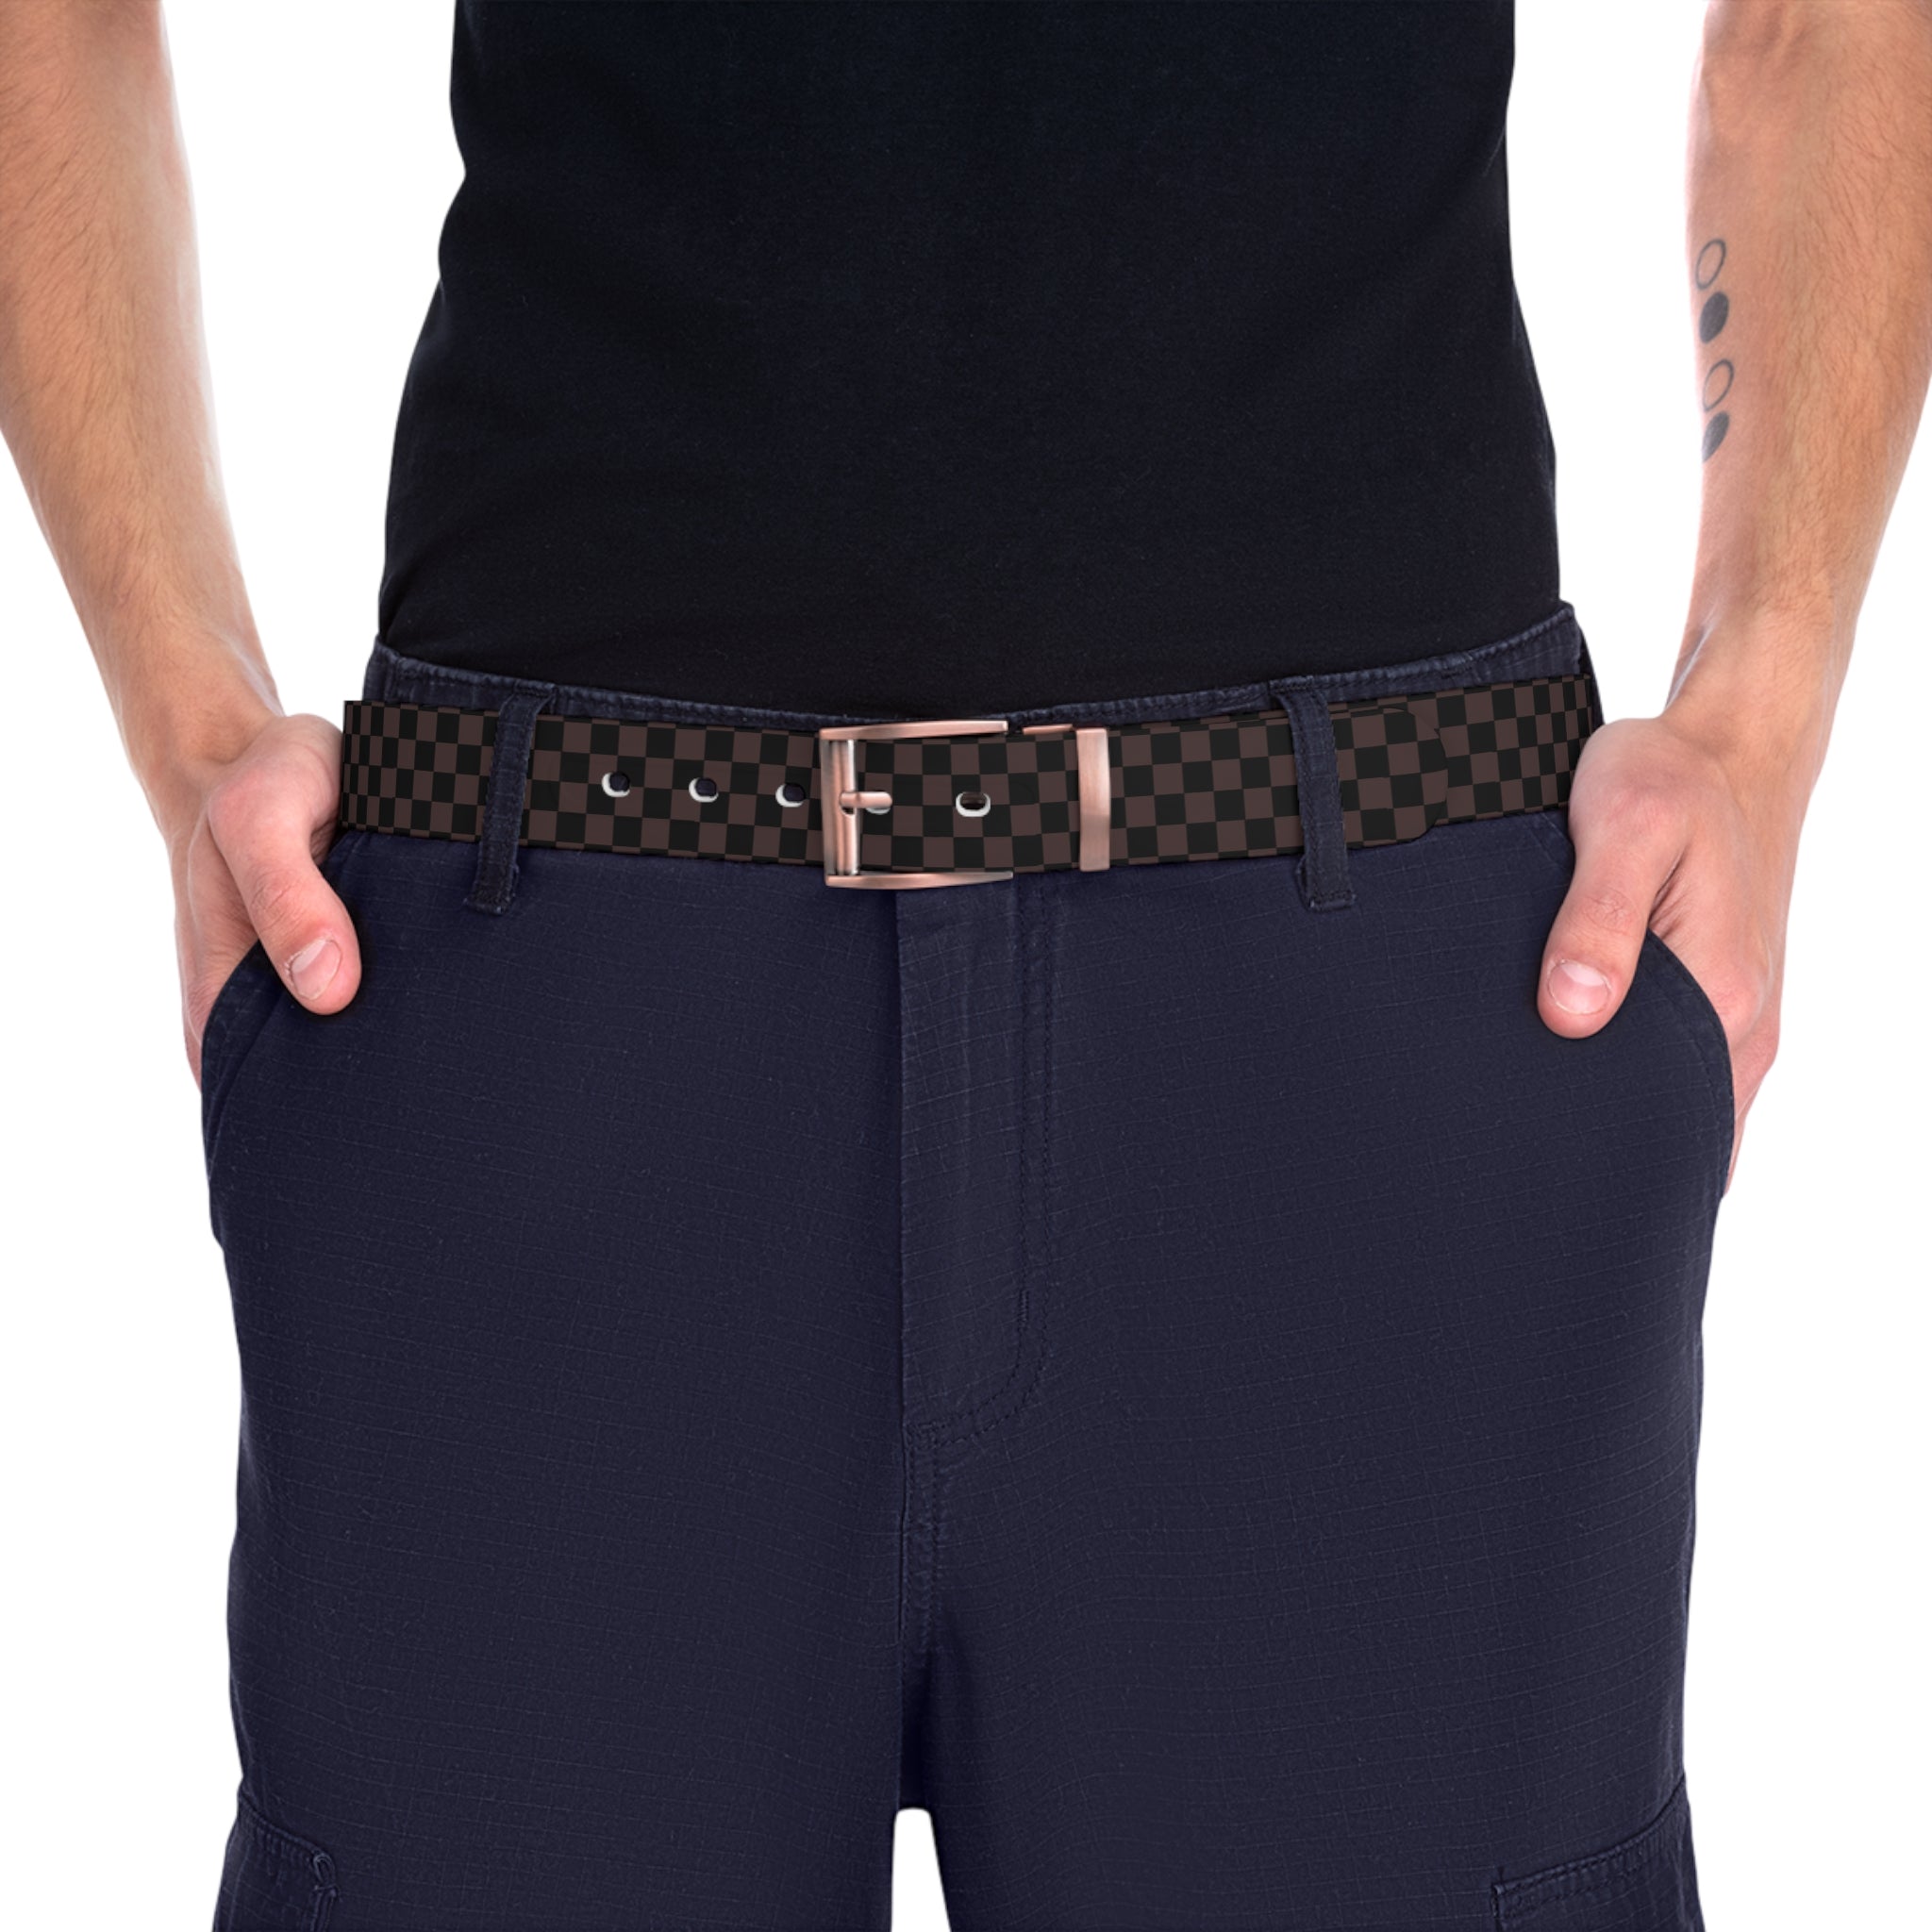 Check Mate in Brown and Black Unisex Fashion Belt, Luxury Women's Belt, Men's Belt, Cut-to-size Belt